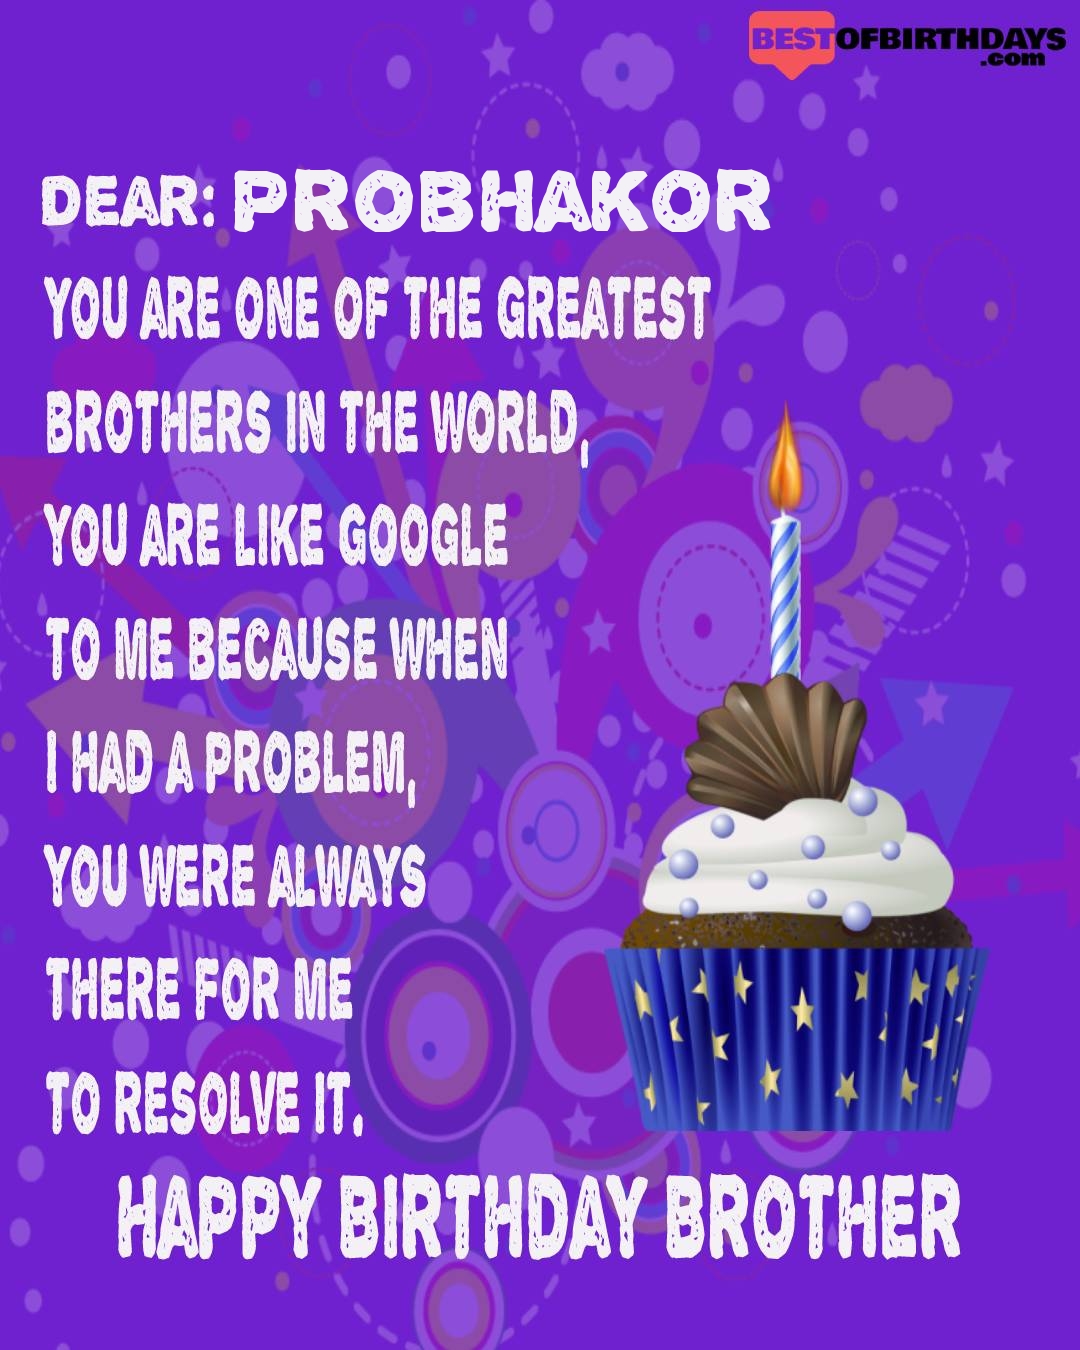 Happy birthday probhakor bhai brother bro